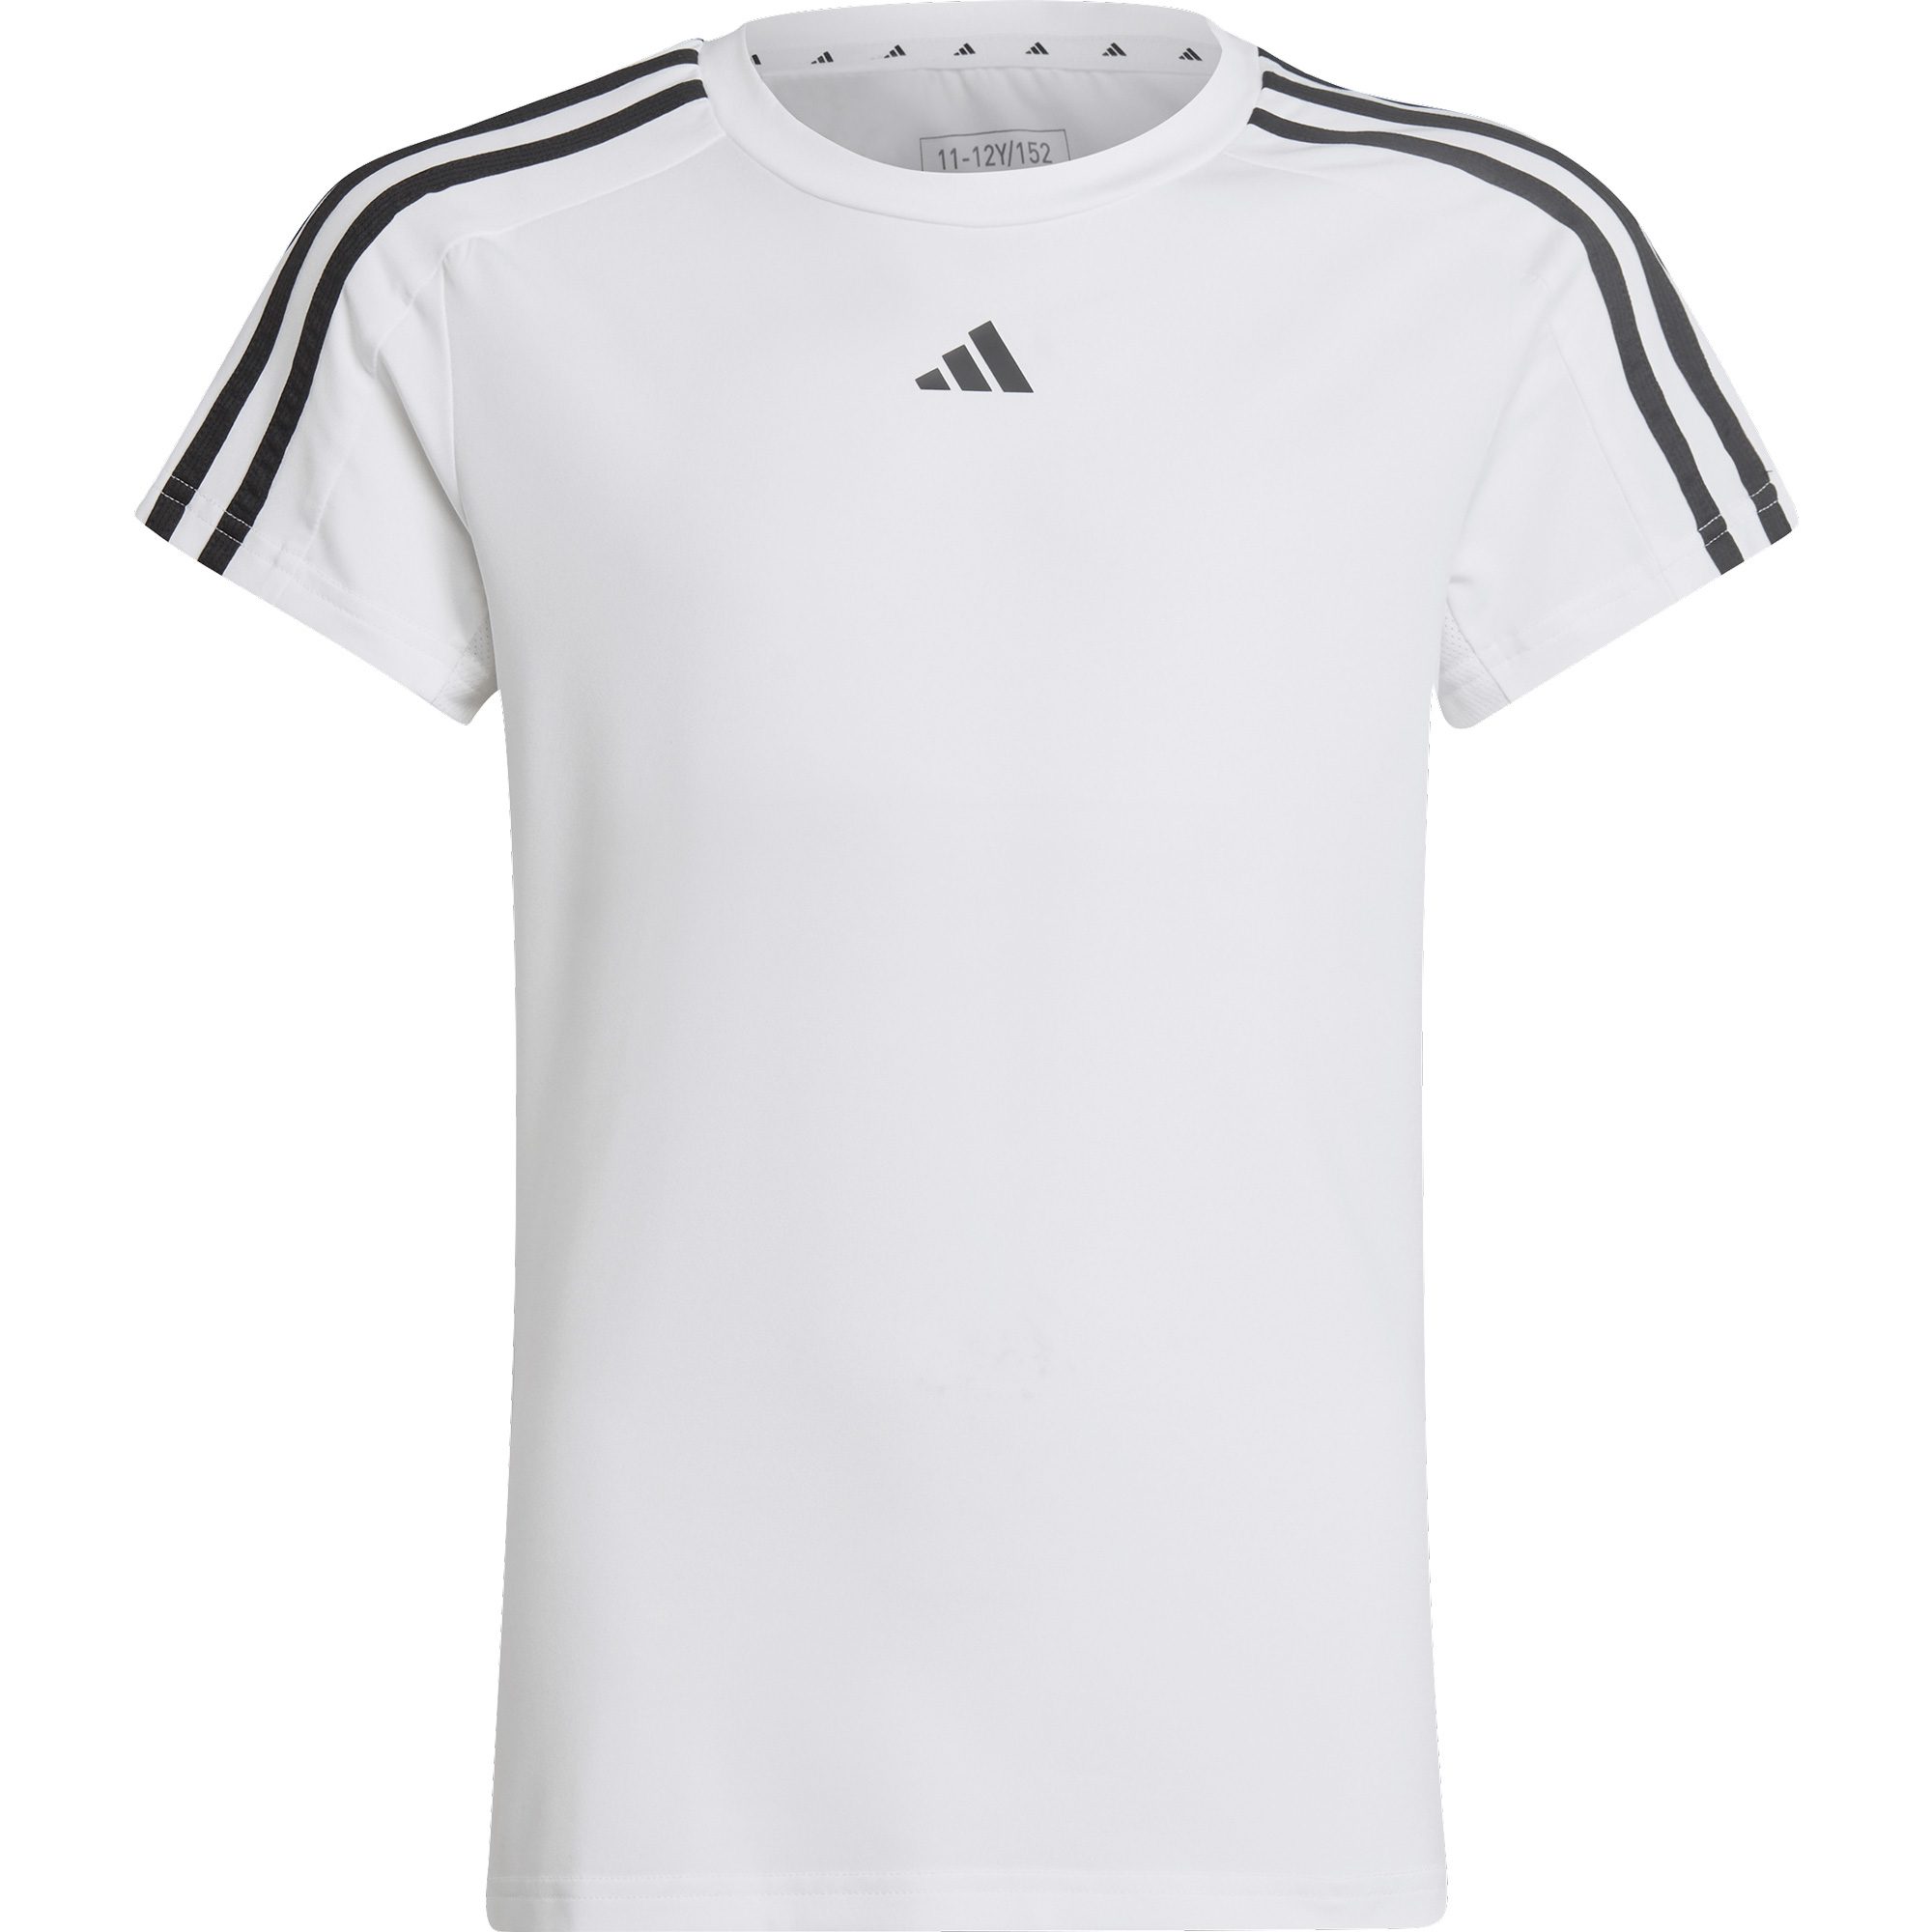 adidas - Train Essentials at Girls white T-Shirt 3-Stripes Sport Bittl Aeroready Shop